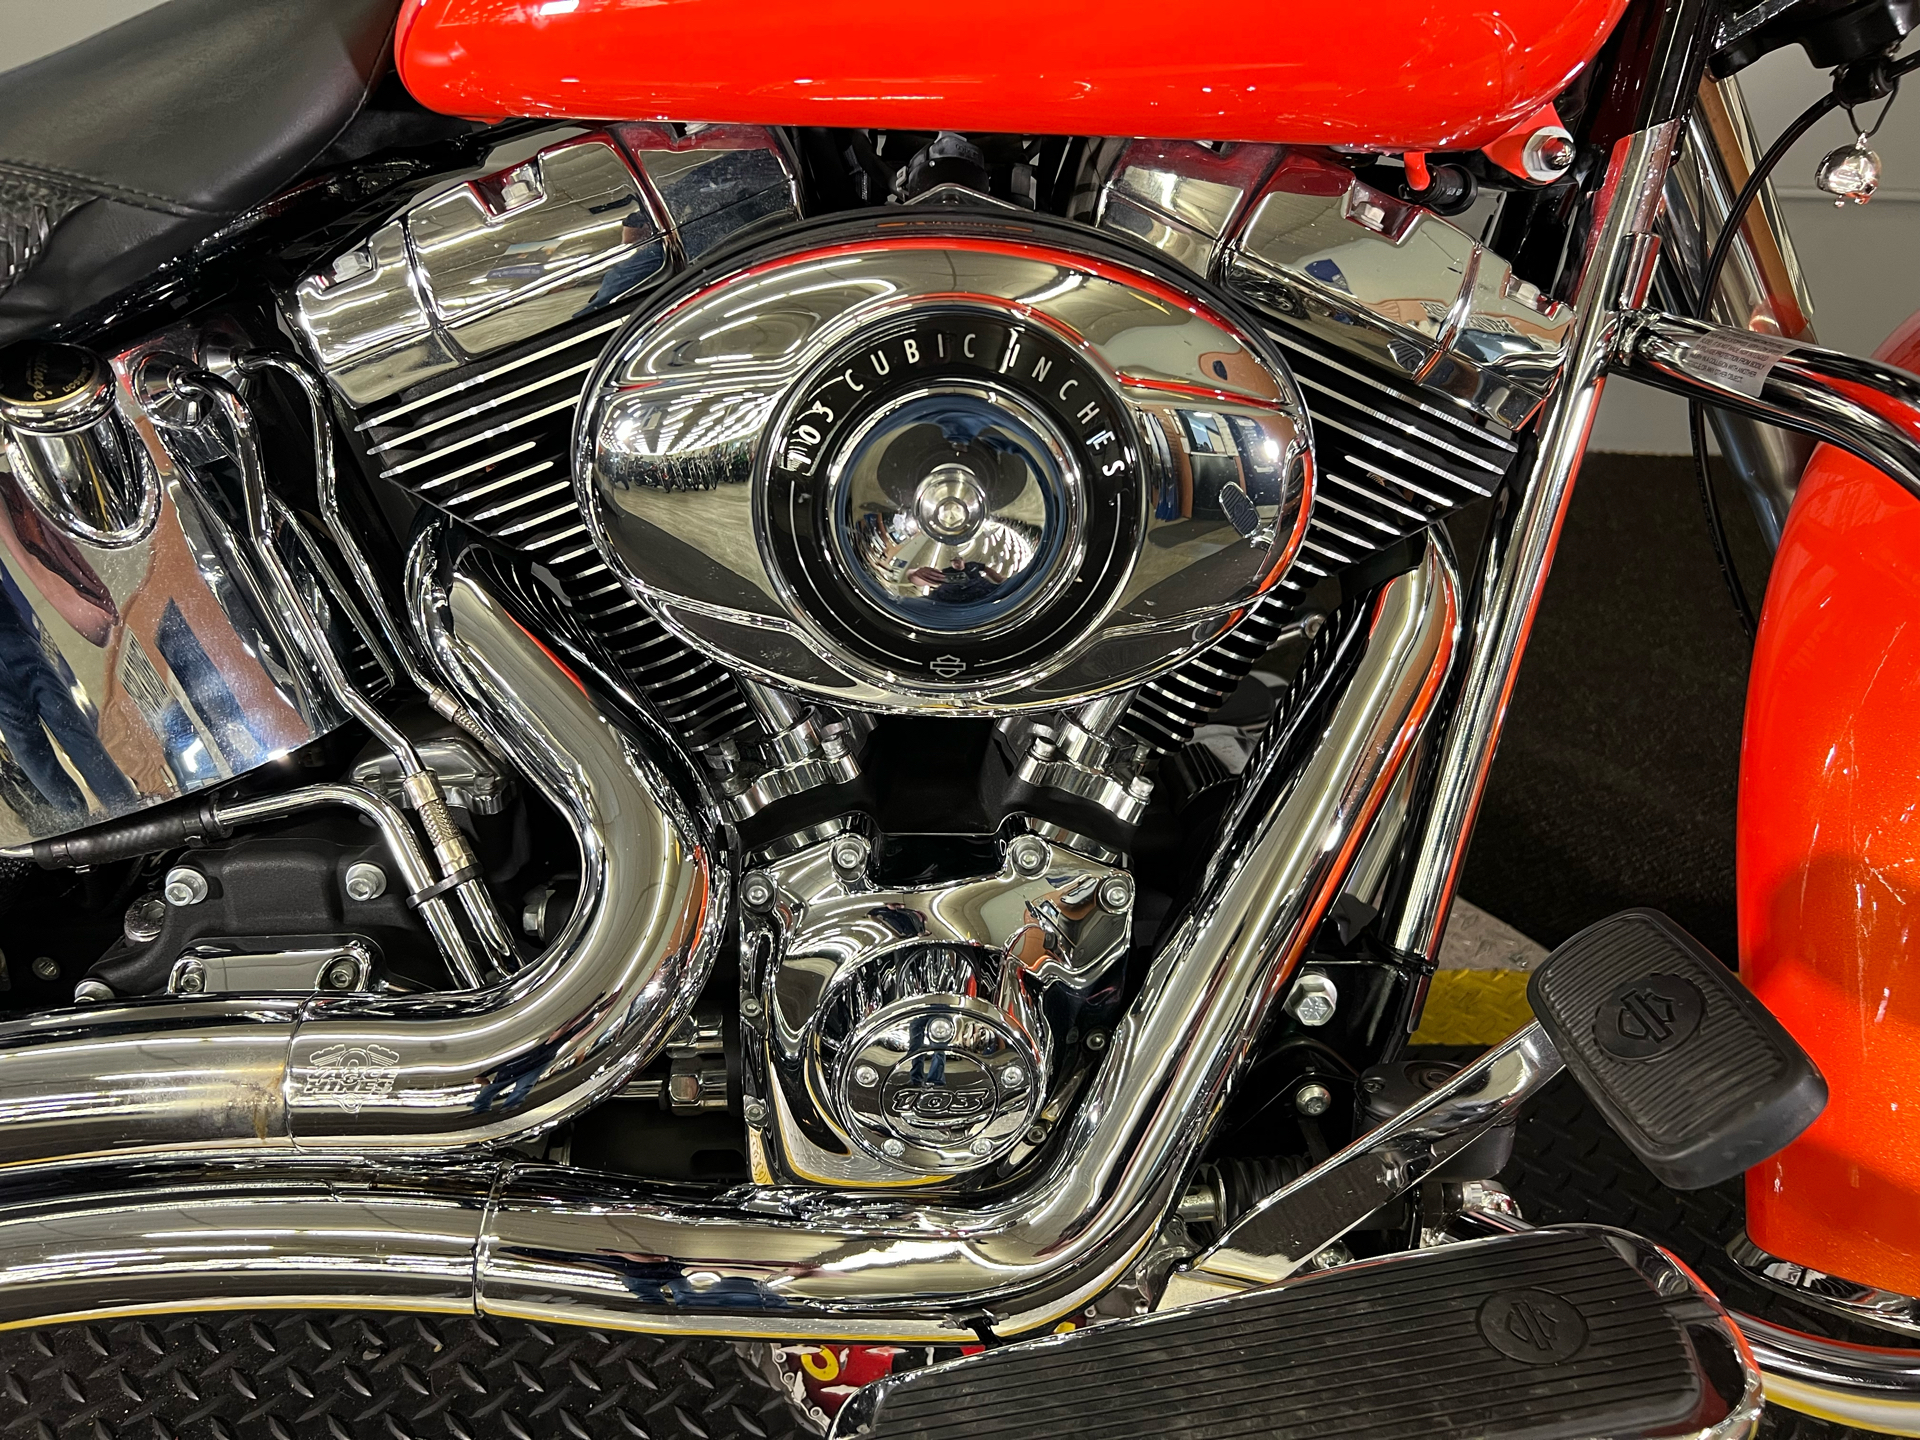 2012 Harley-Davidson Softail® Deluxe in Tyrone, Pennsylvania - Photo 3